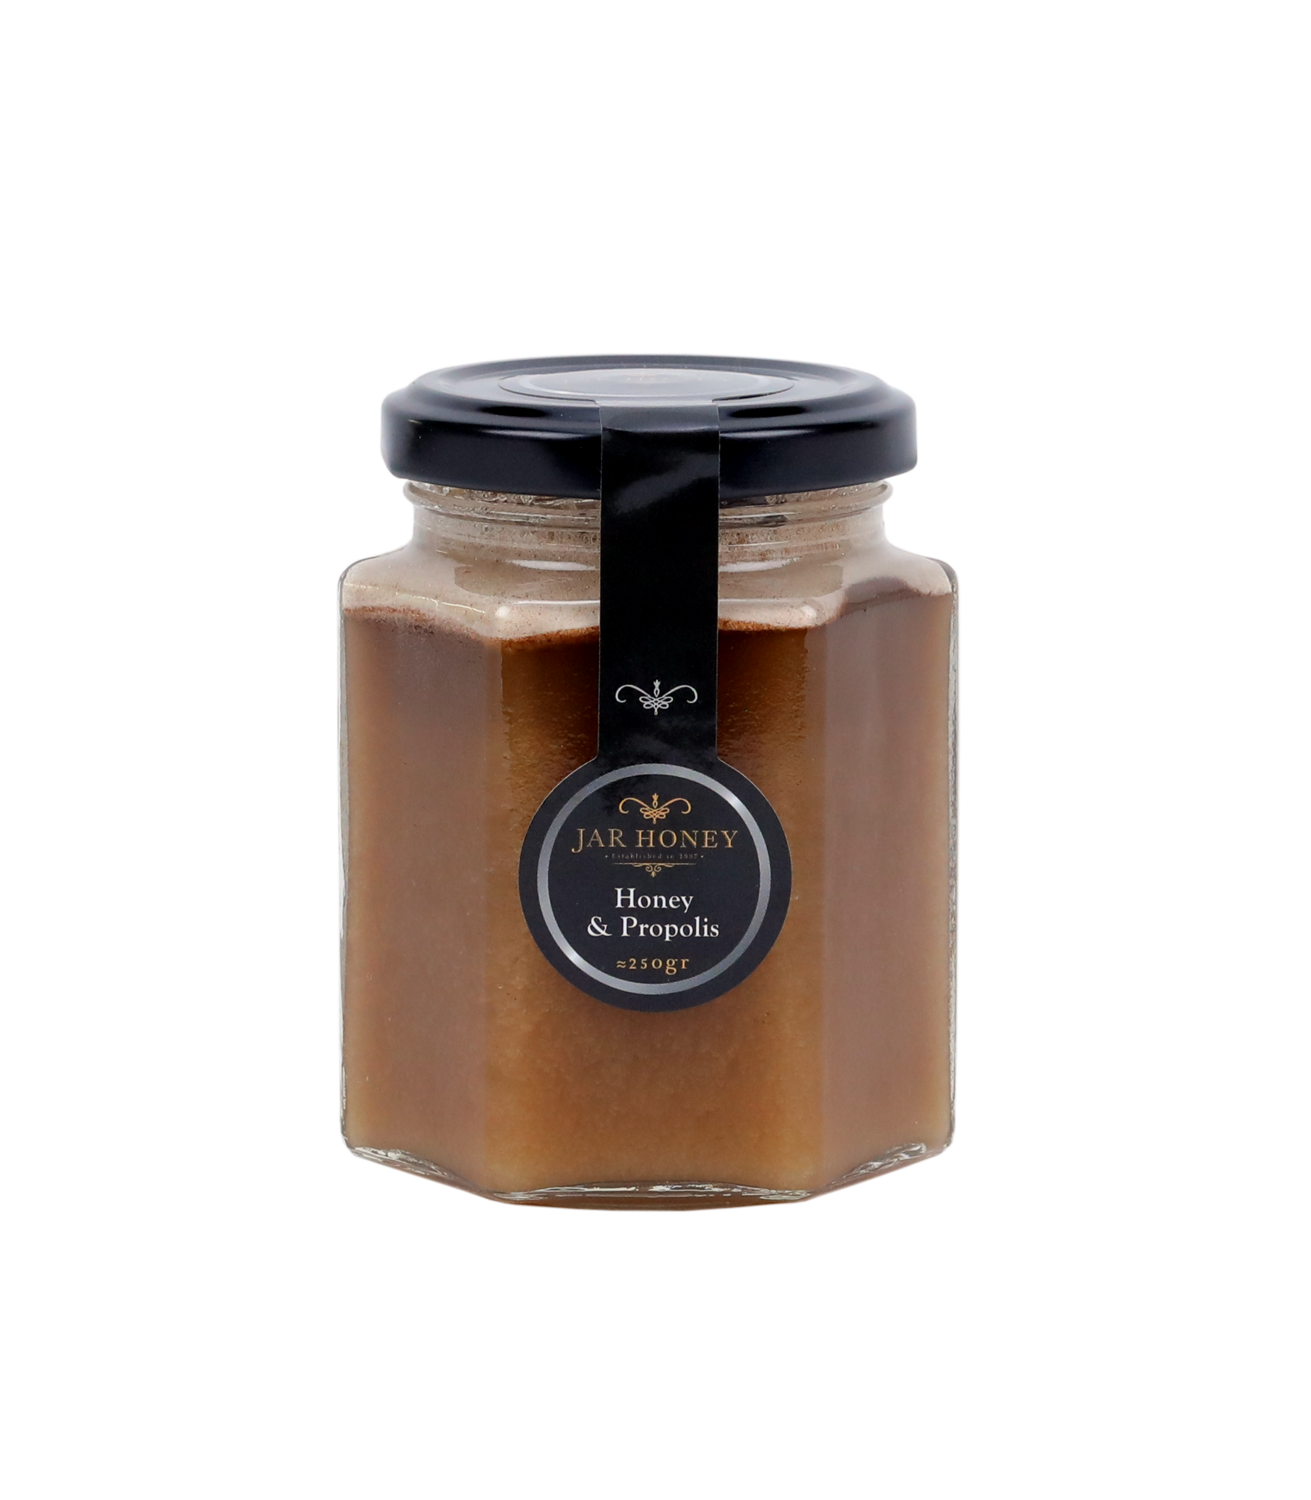 Honey with Propolis (Jar) - JAR HONEY